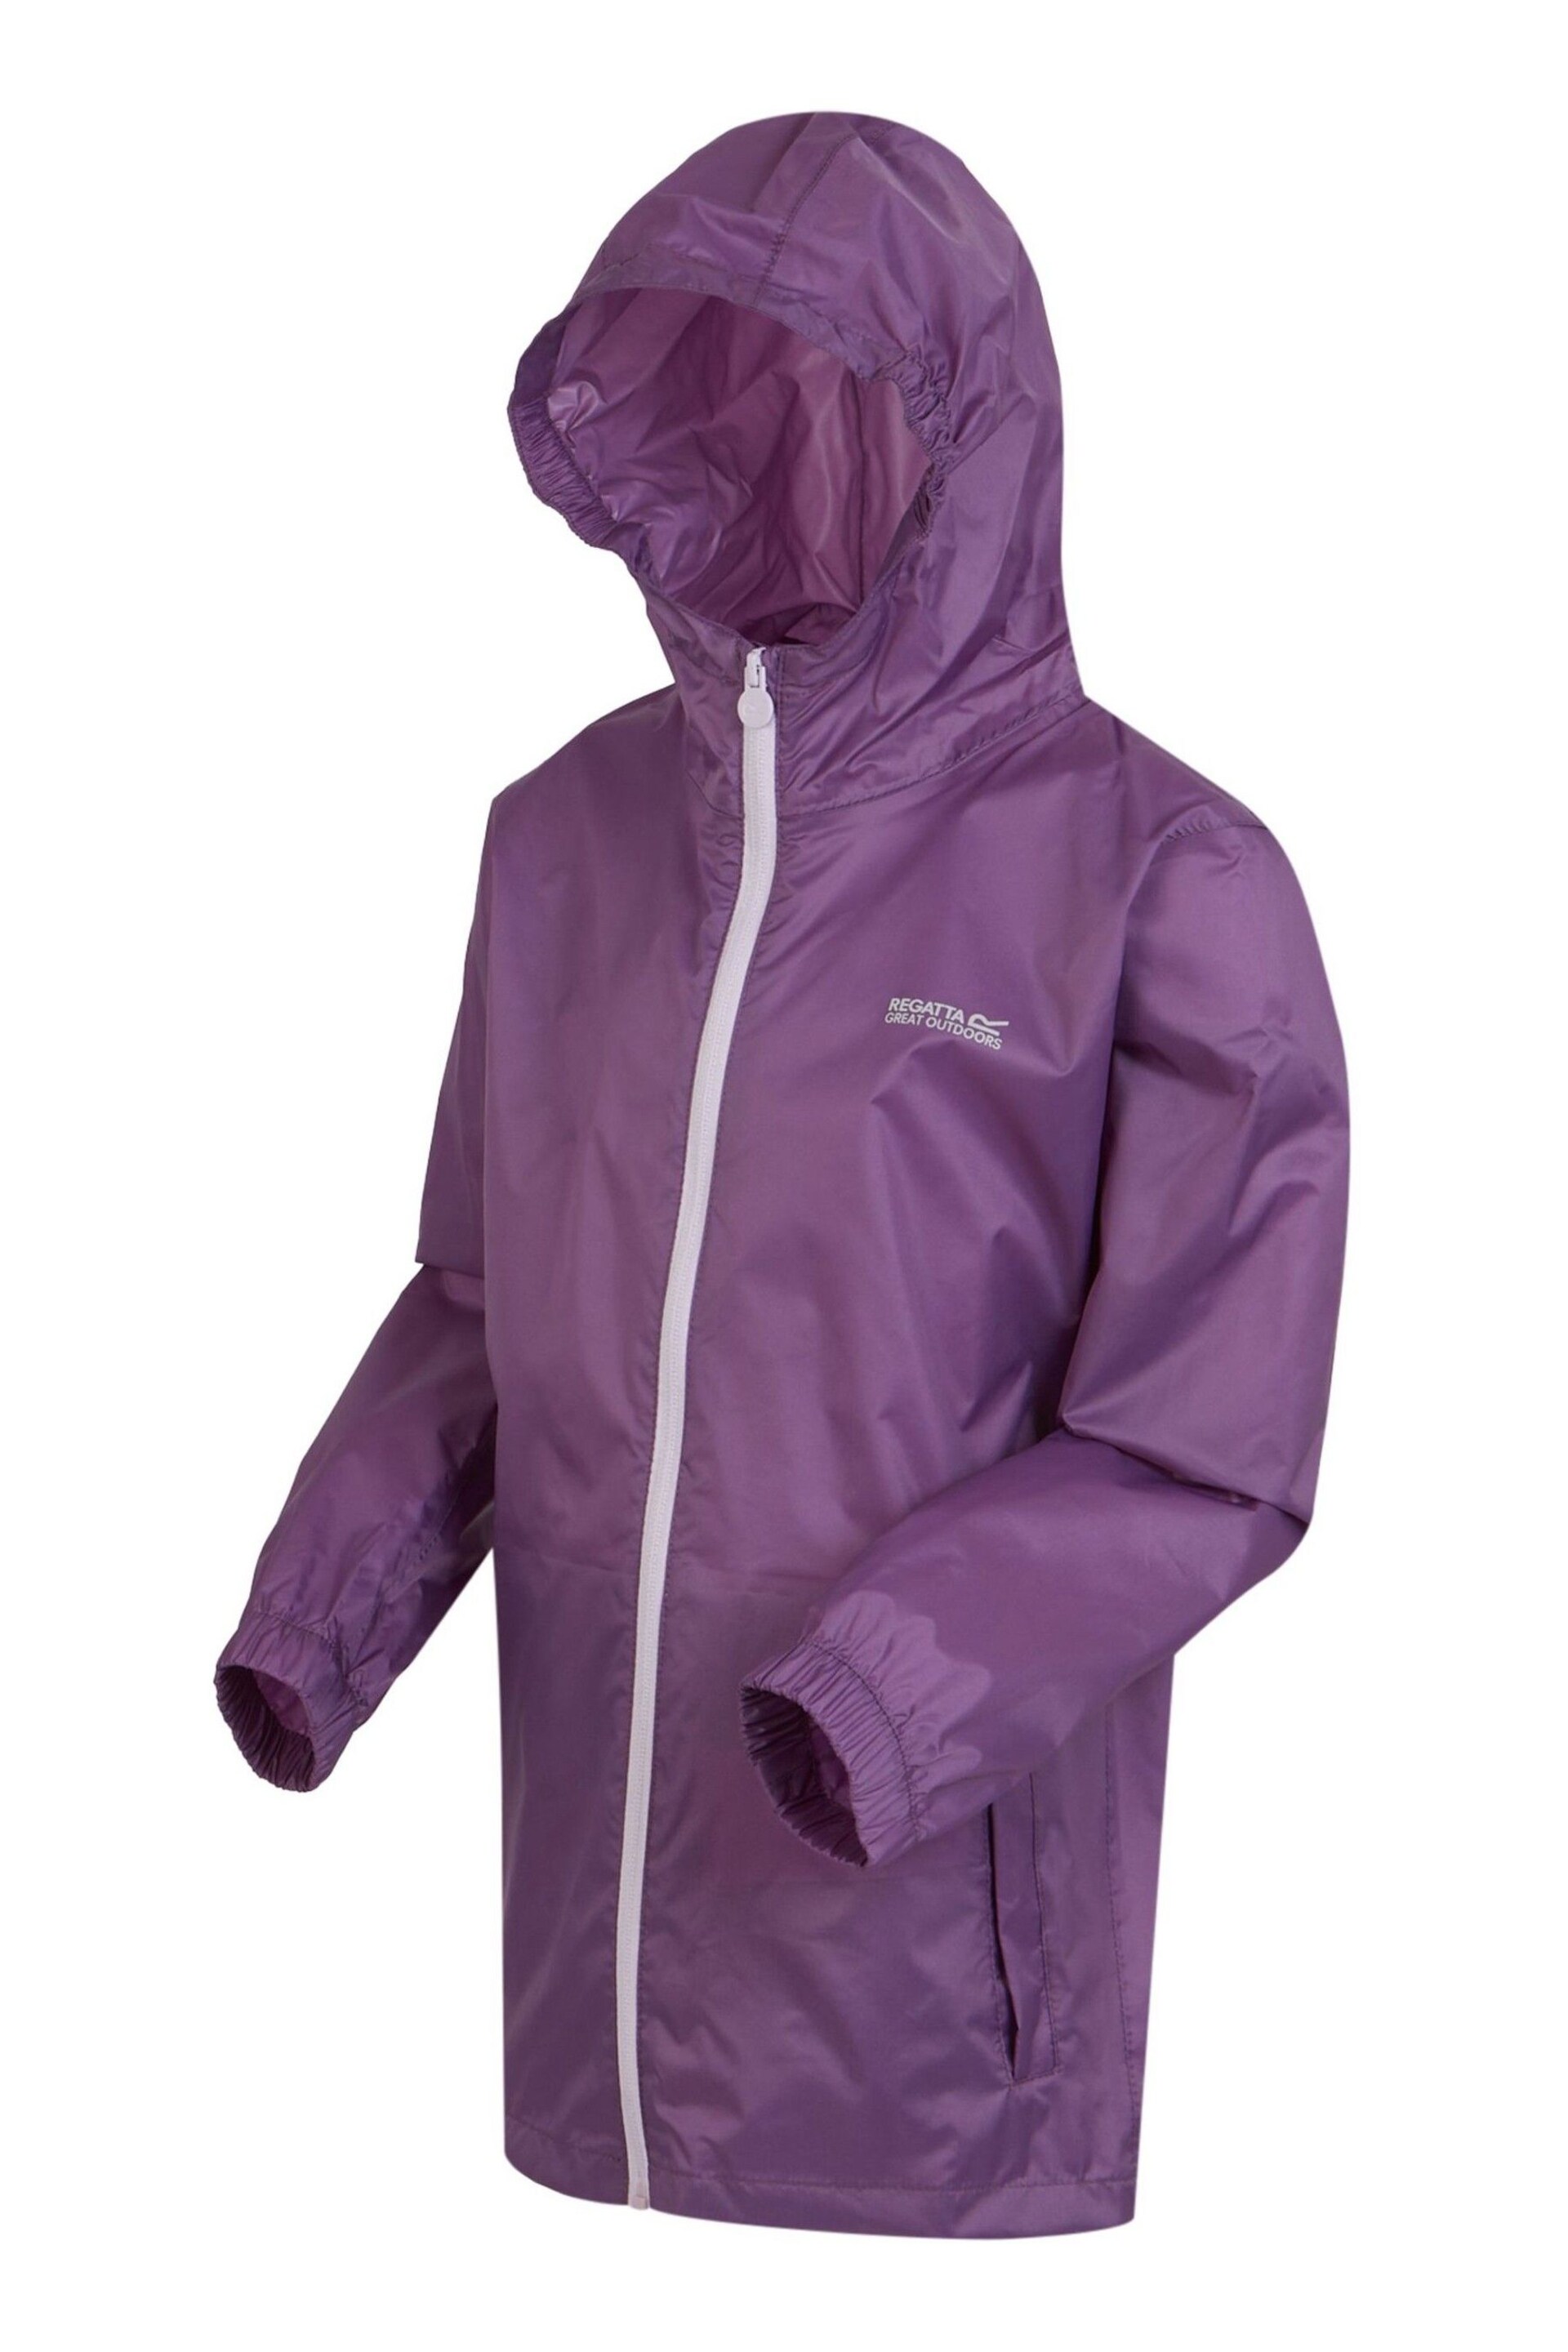 Regatta Purple Pack It III Waterproof Jacket - Image 8 of 8